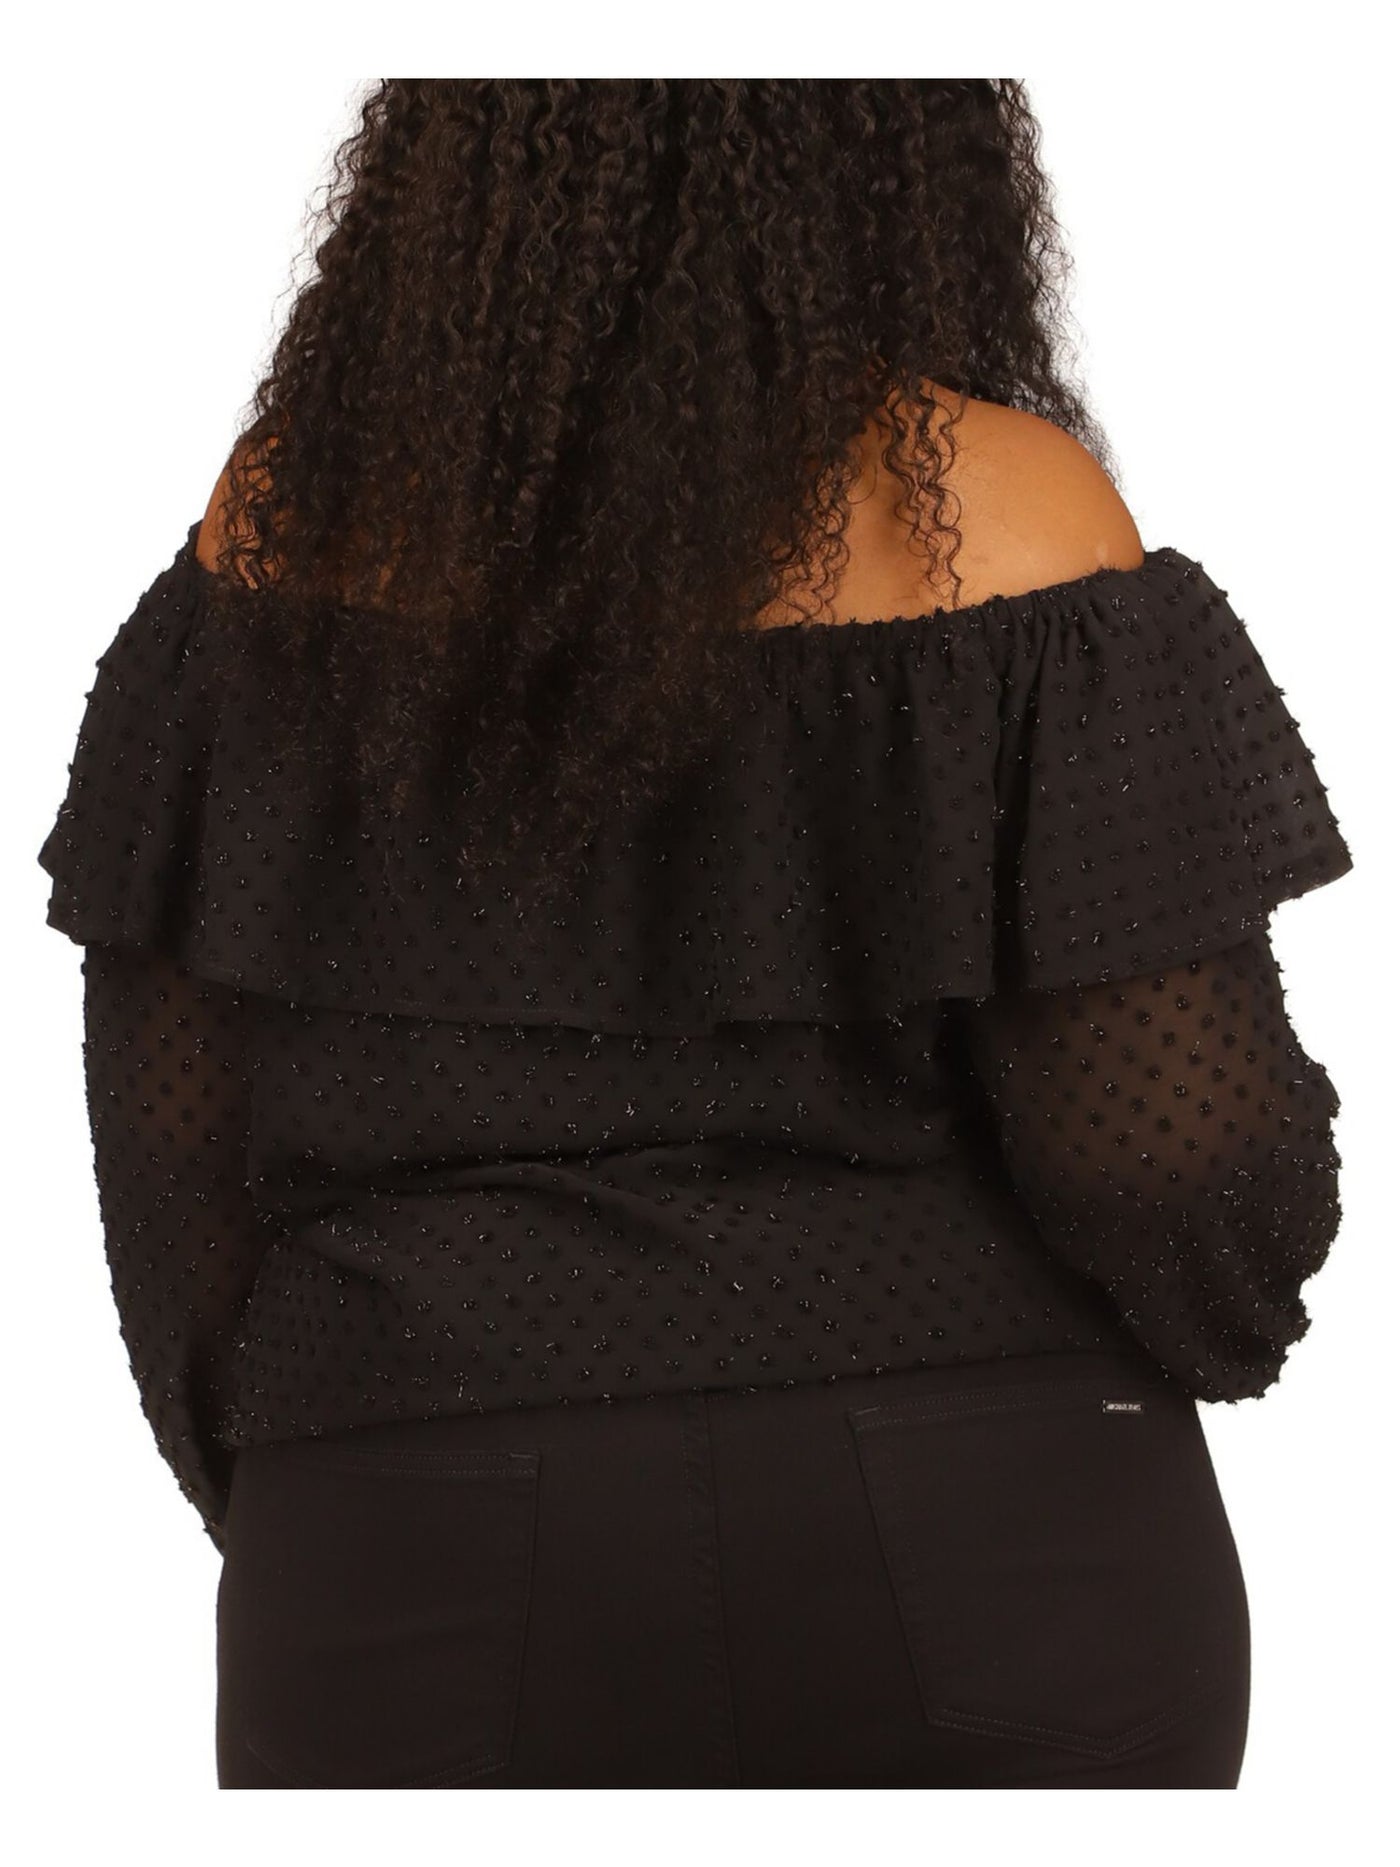 MICHAEL MICHAEL KORS Womens Black Sheer Lined Ruffle Overlay Long Sleeve Off Shoulder Top Plus 2X